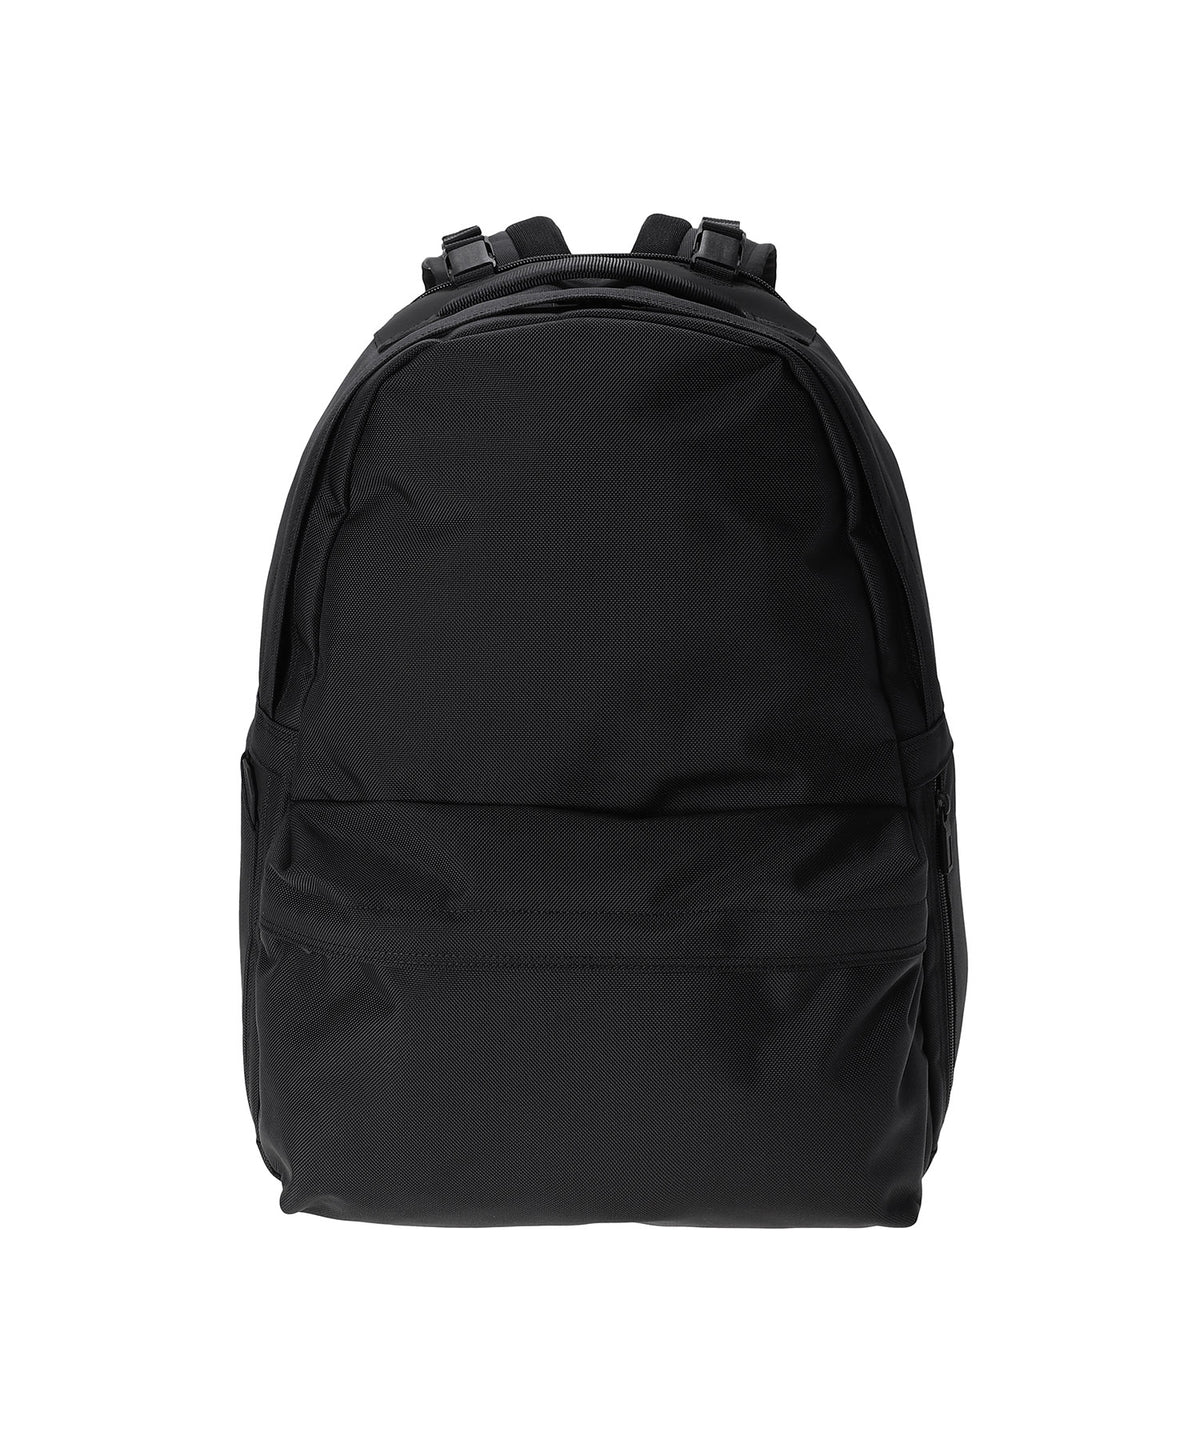 Backpack Pro M